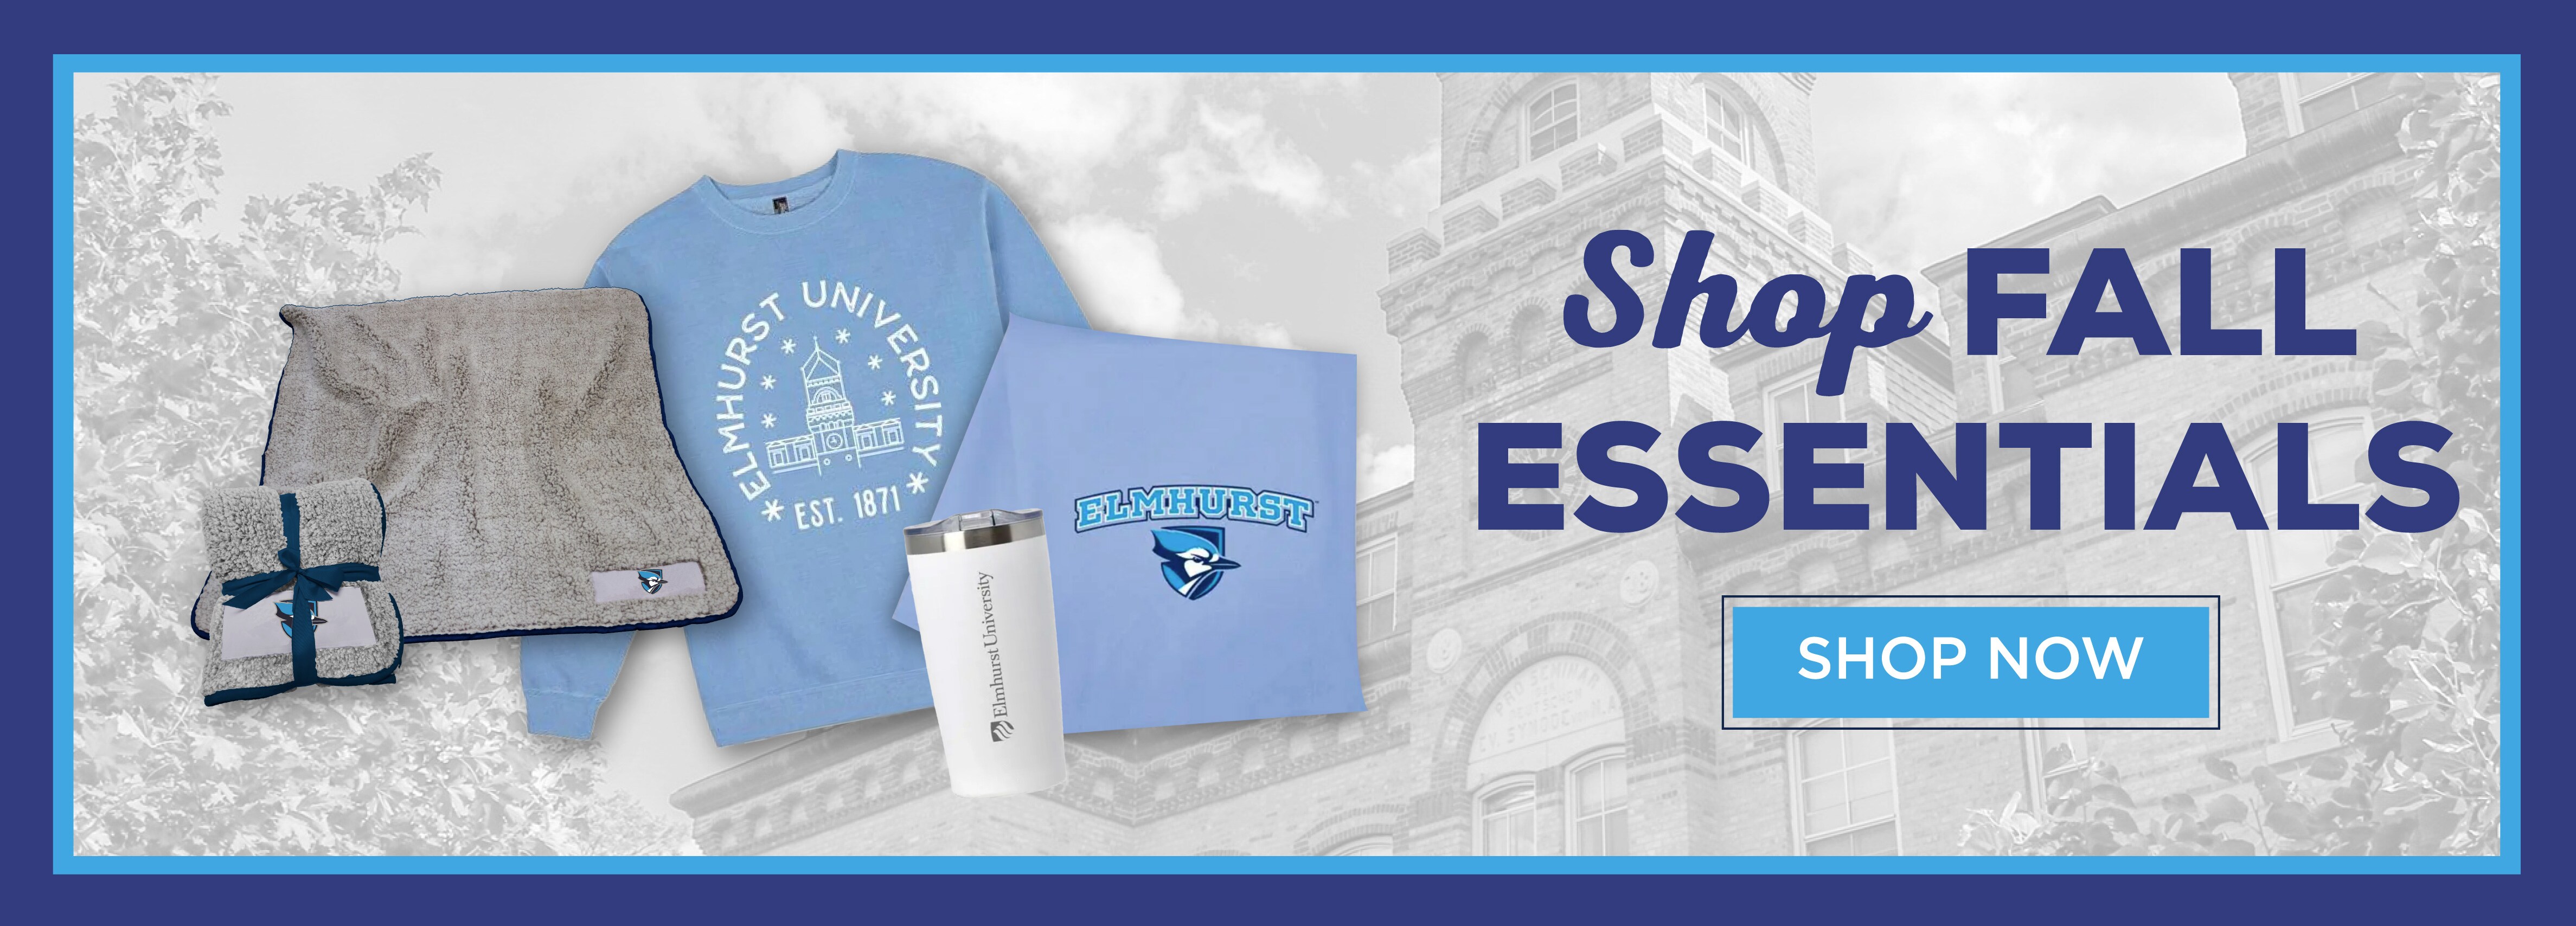 Shop Fall Essentials Shop Now. Grey plush blanket, blue crewneck, white thermos cup, and blue elmhurst blanket